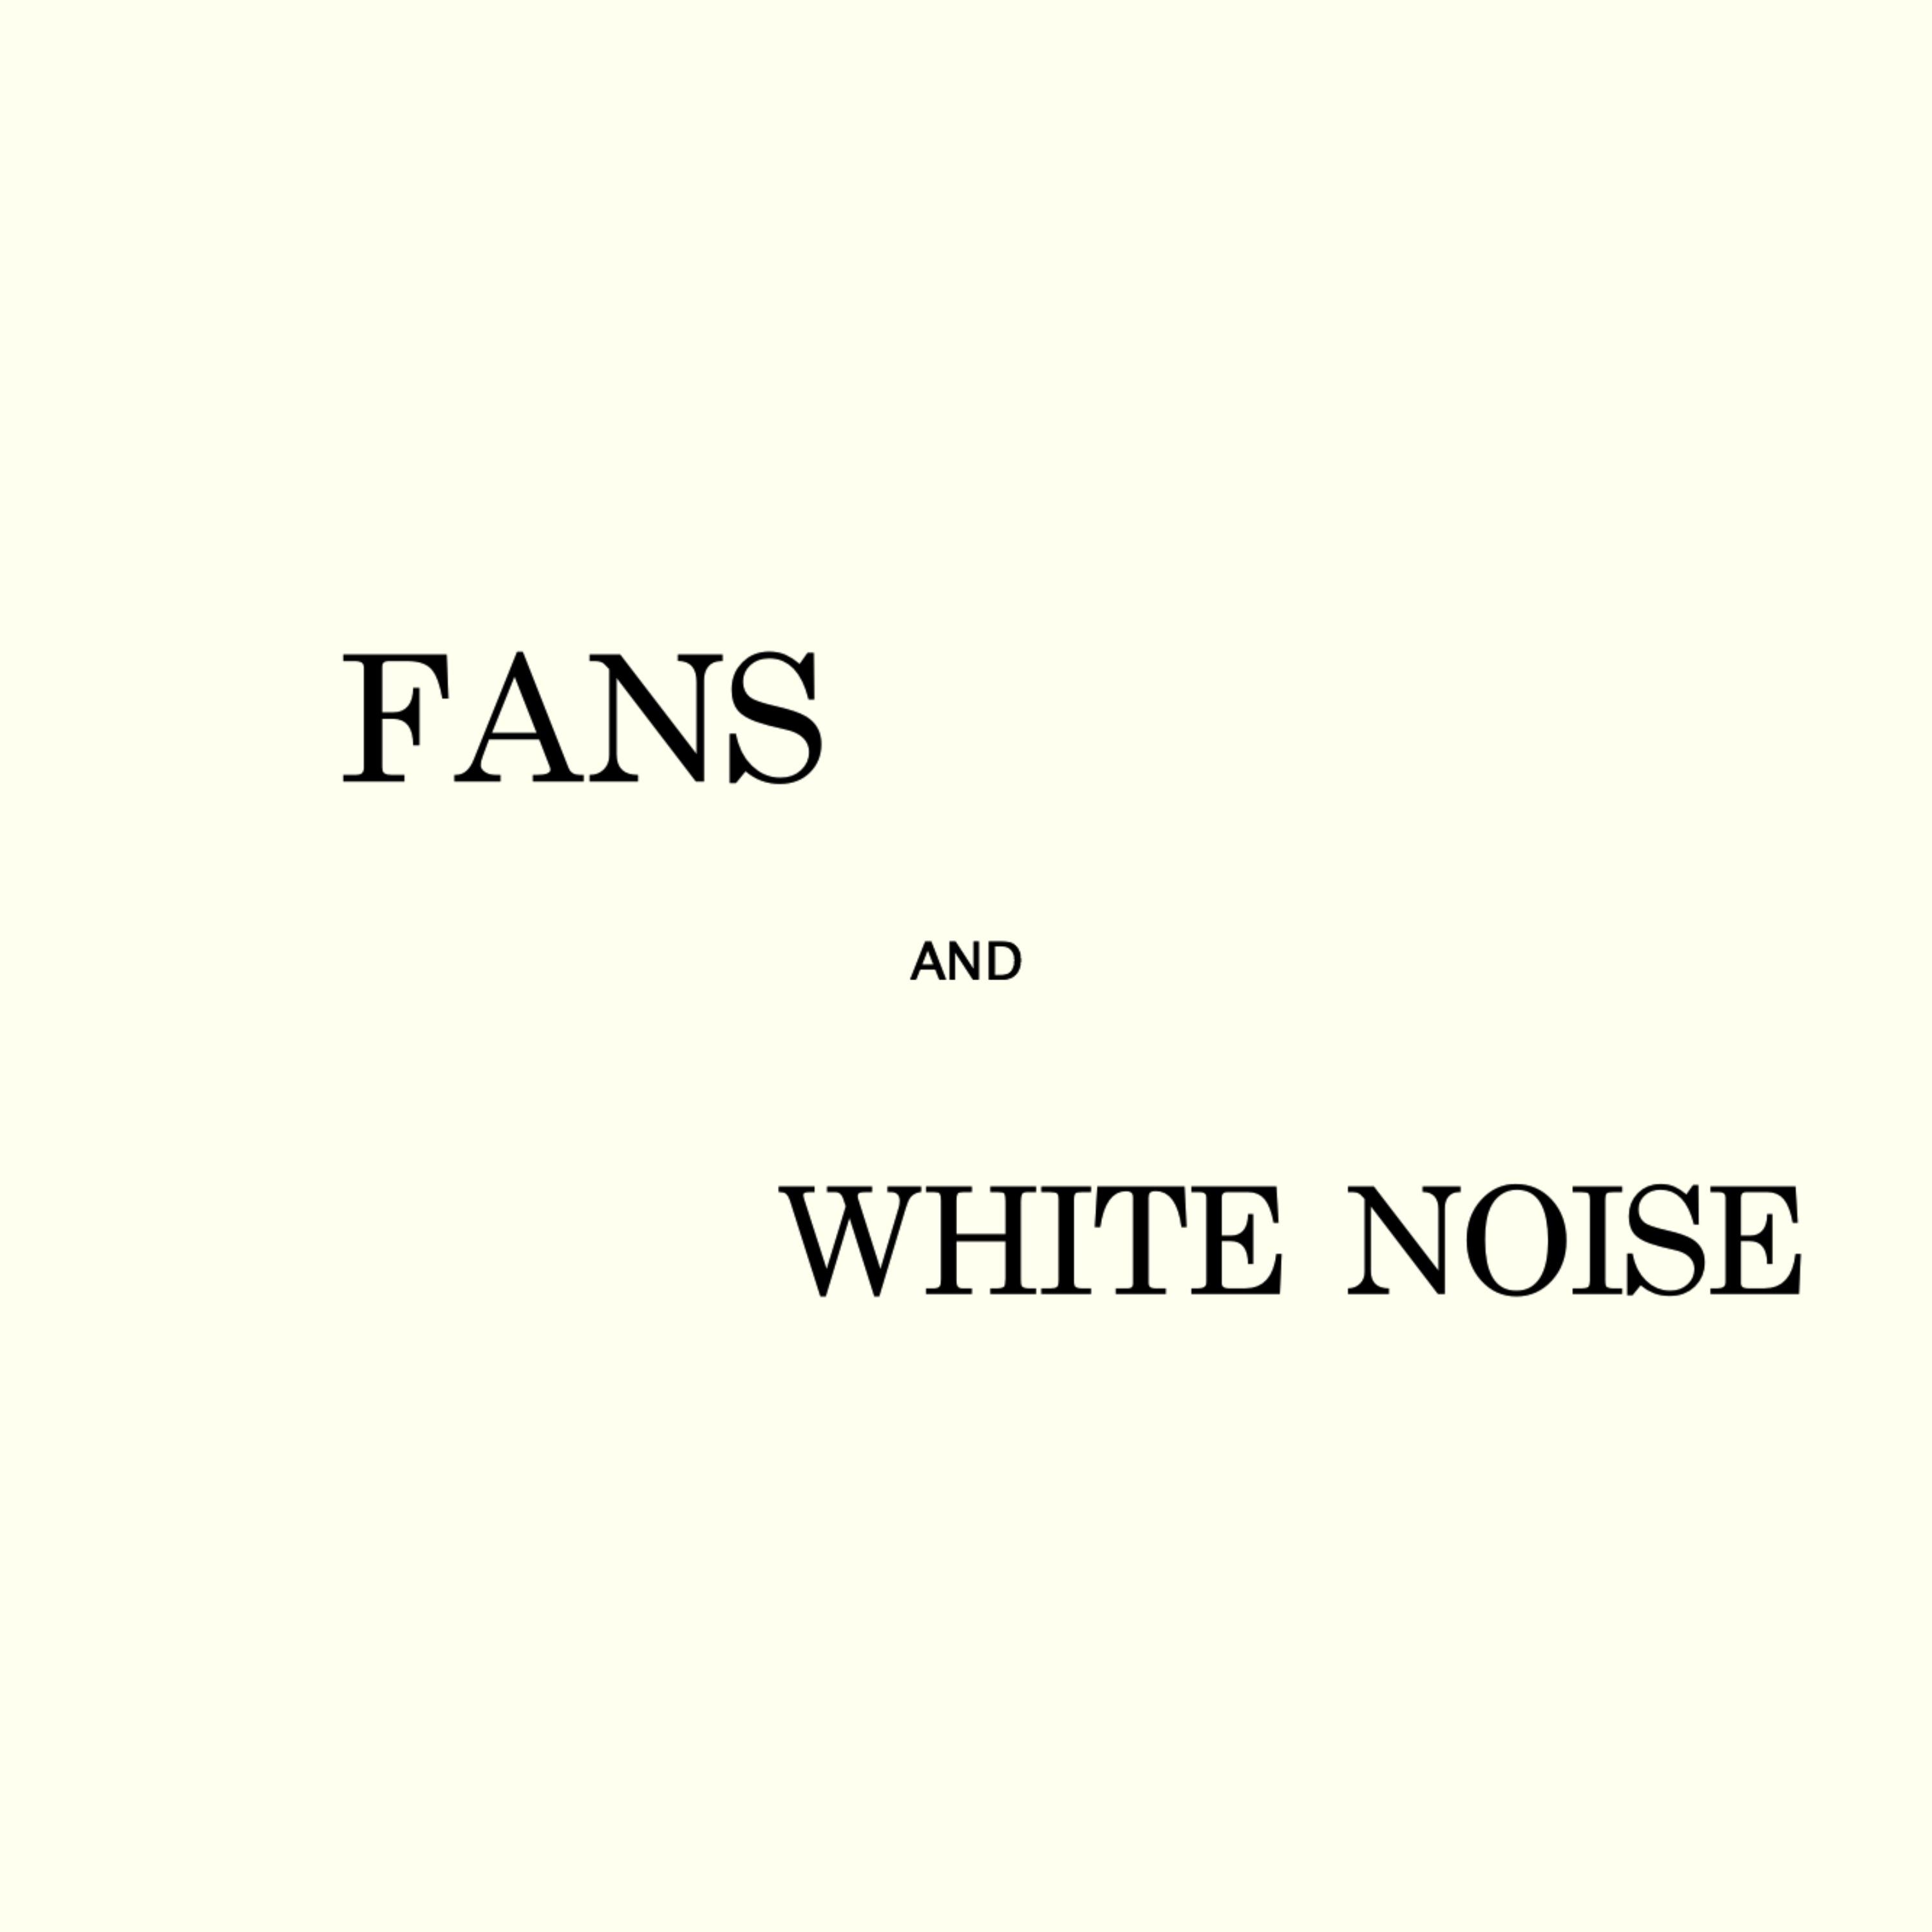 White Noise Fan for Sleep